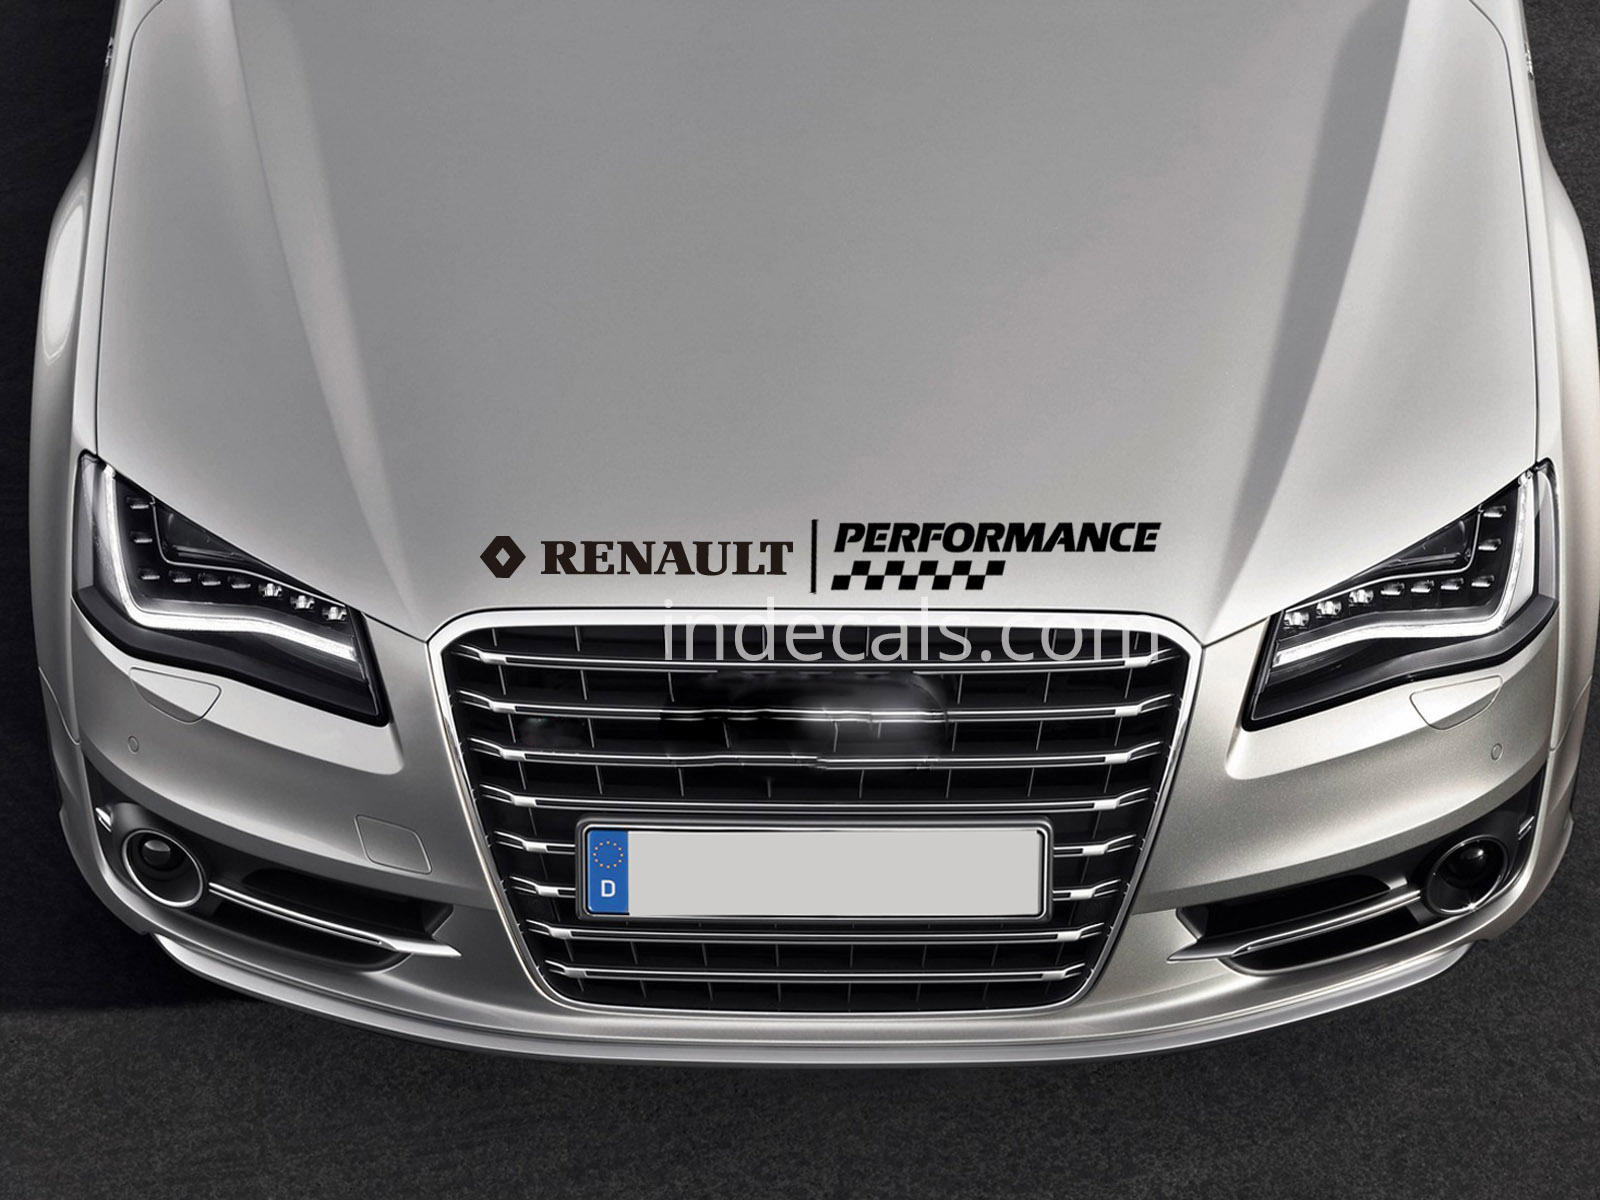 1 x Renault Performance Sticker for Bonnet - Black